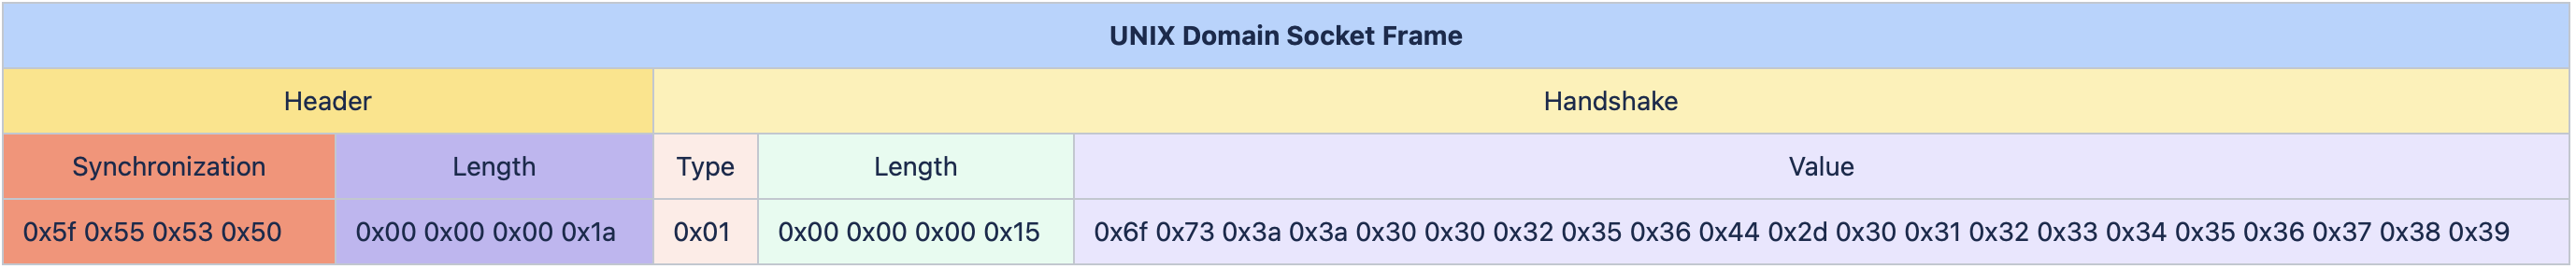 UNIX Domain Socket Frame with Handshake Message